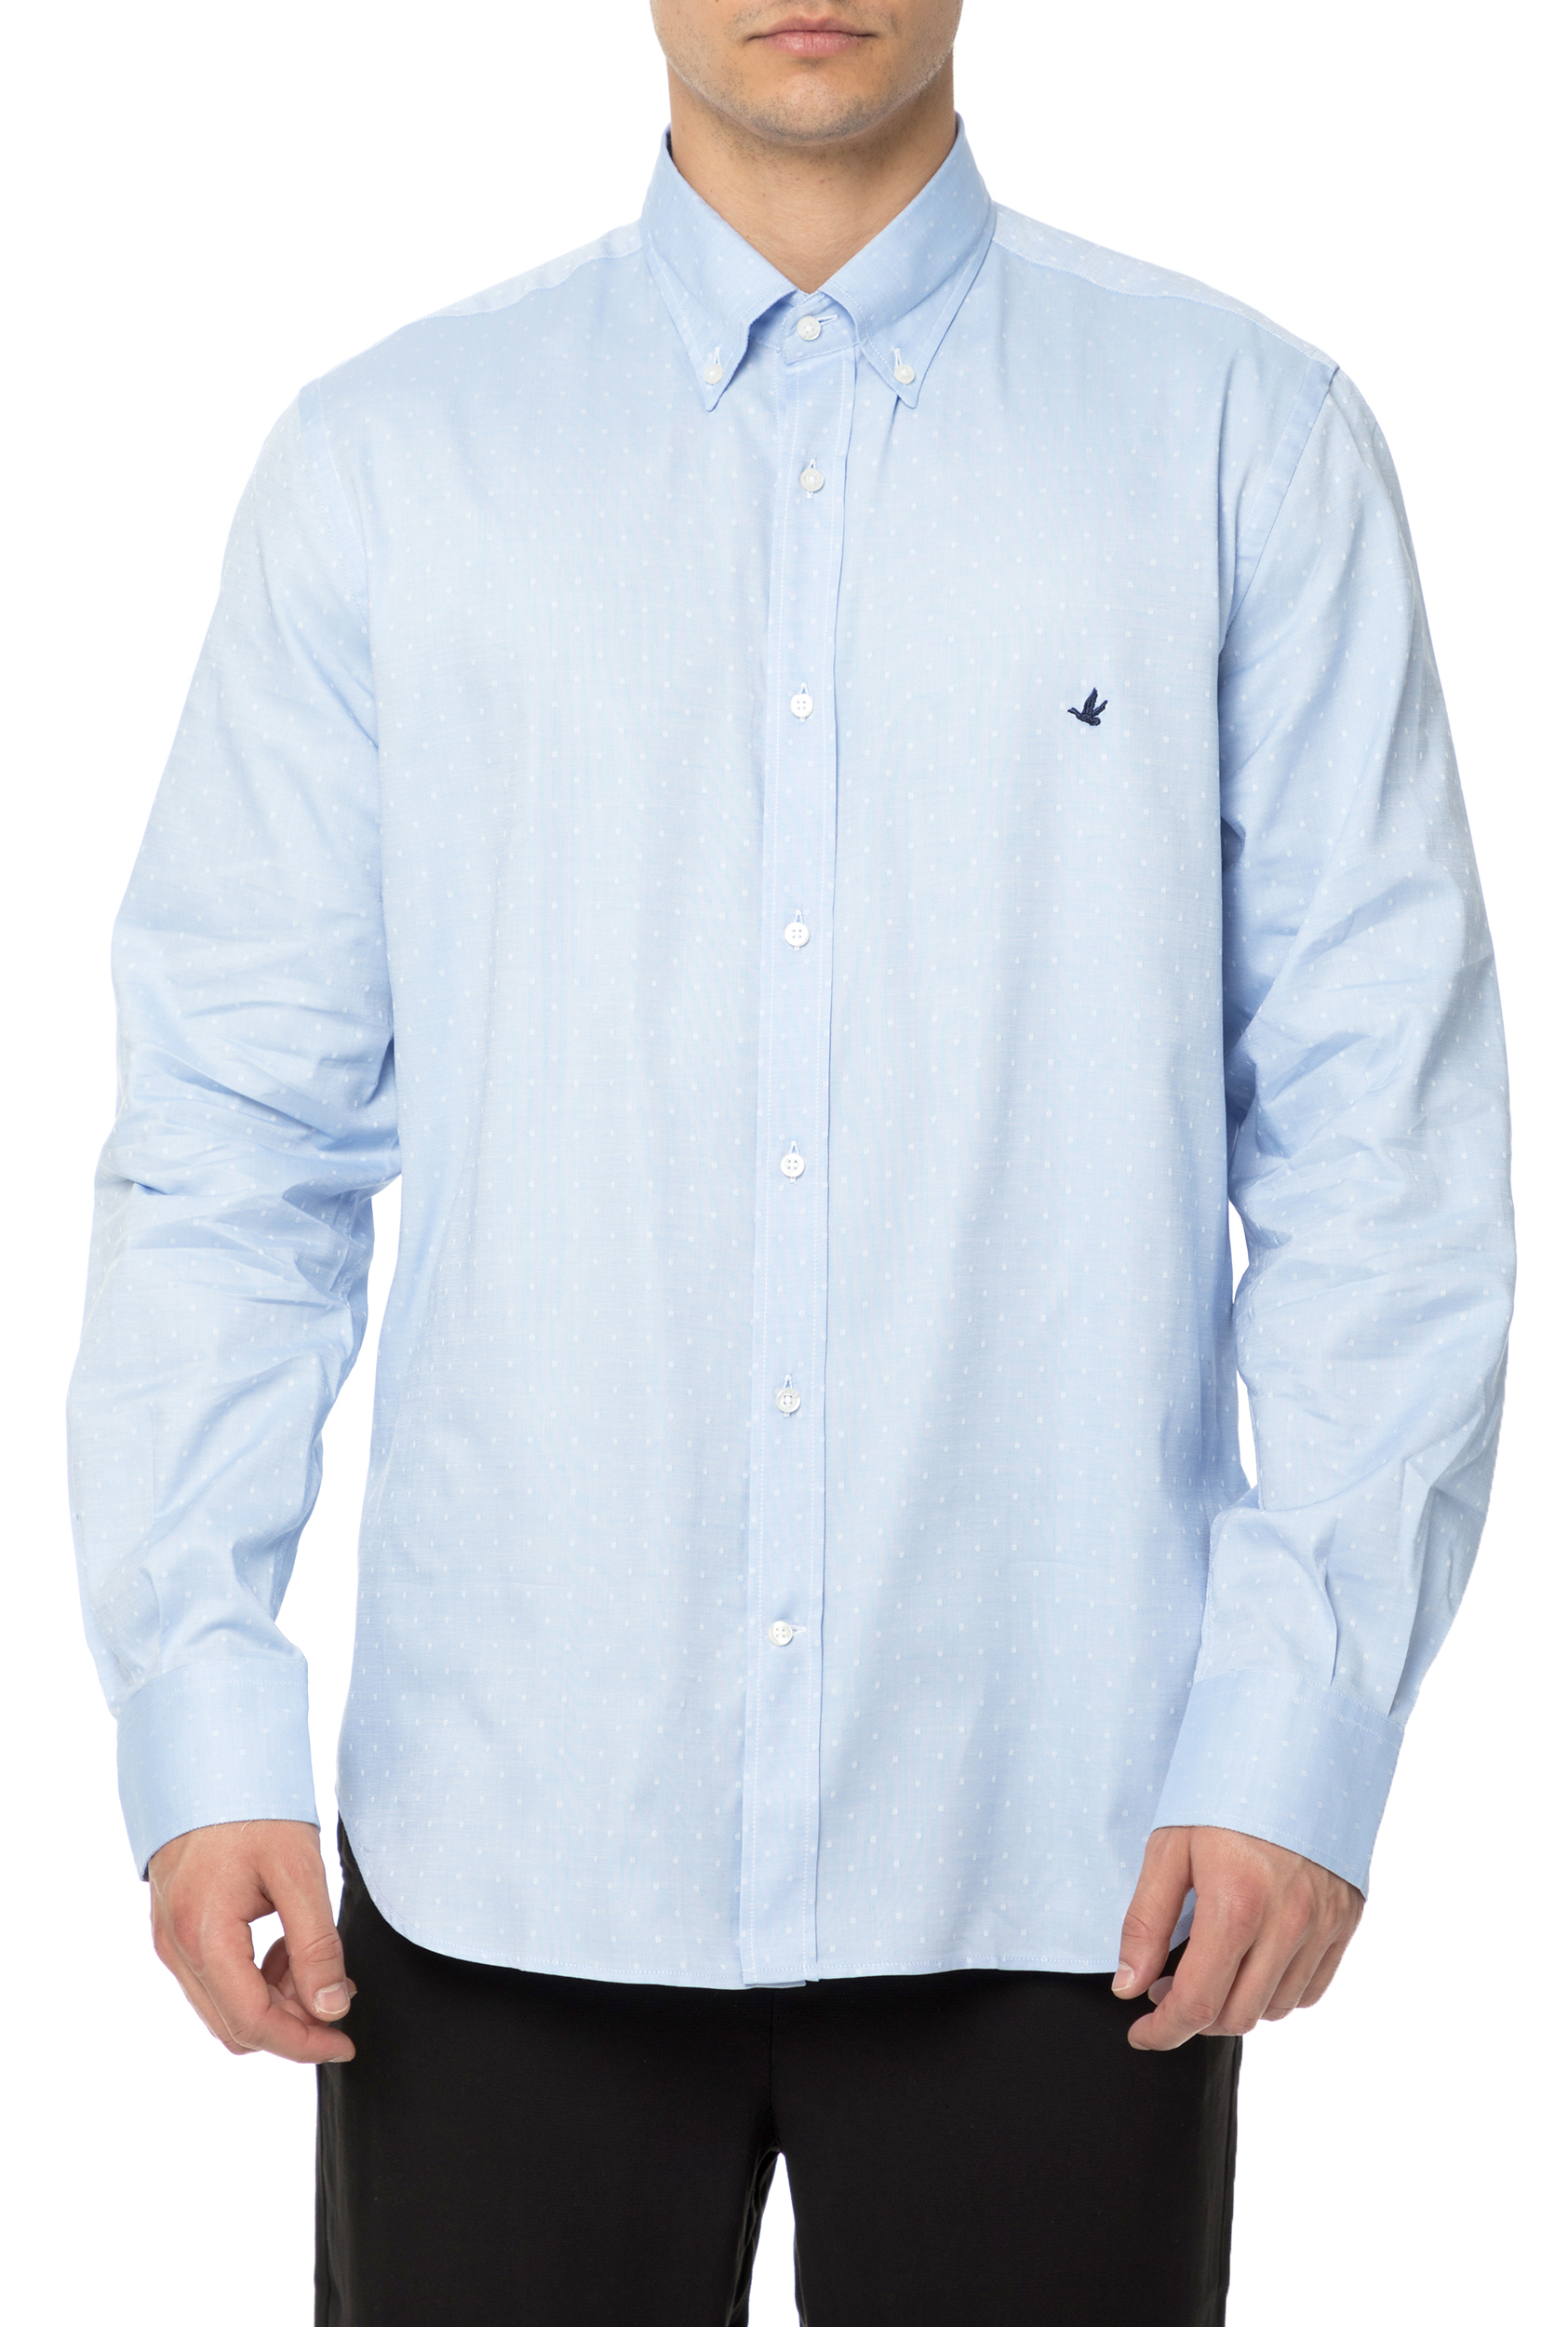 BROOKSFIELD Ανδρικό μακρυμάνικο πουκάμισο BROOKSFIELD γαλάζιο με πουά μοτίβο